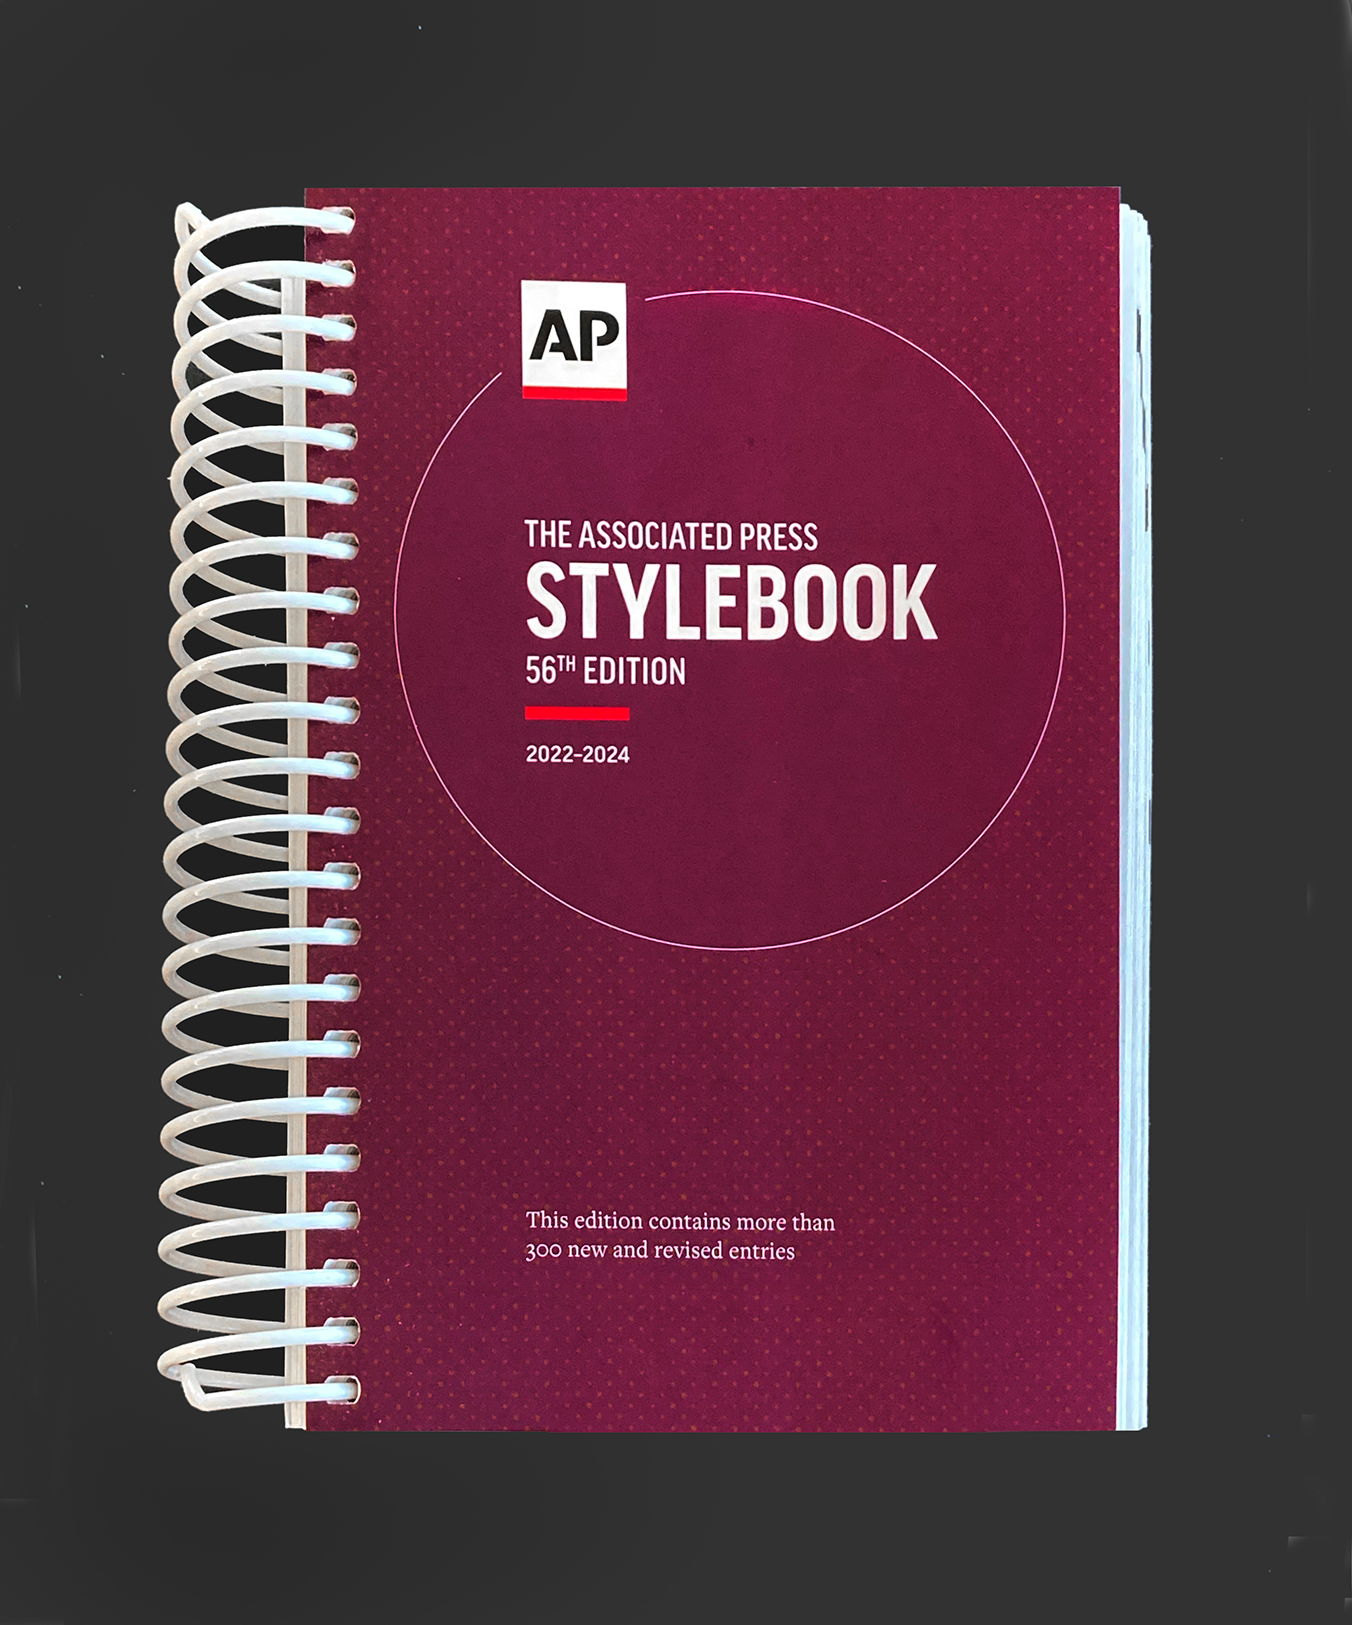 Ap stylebook 2018 pdf free download epson workforce wf 3620 software download